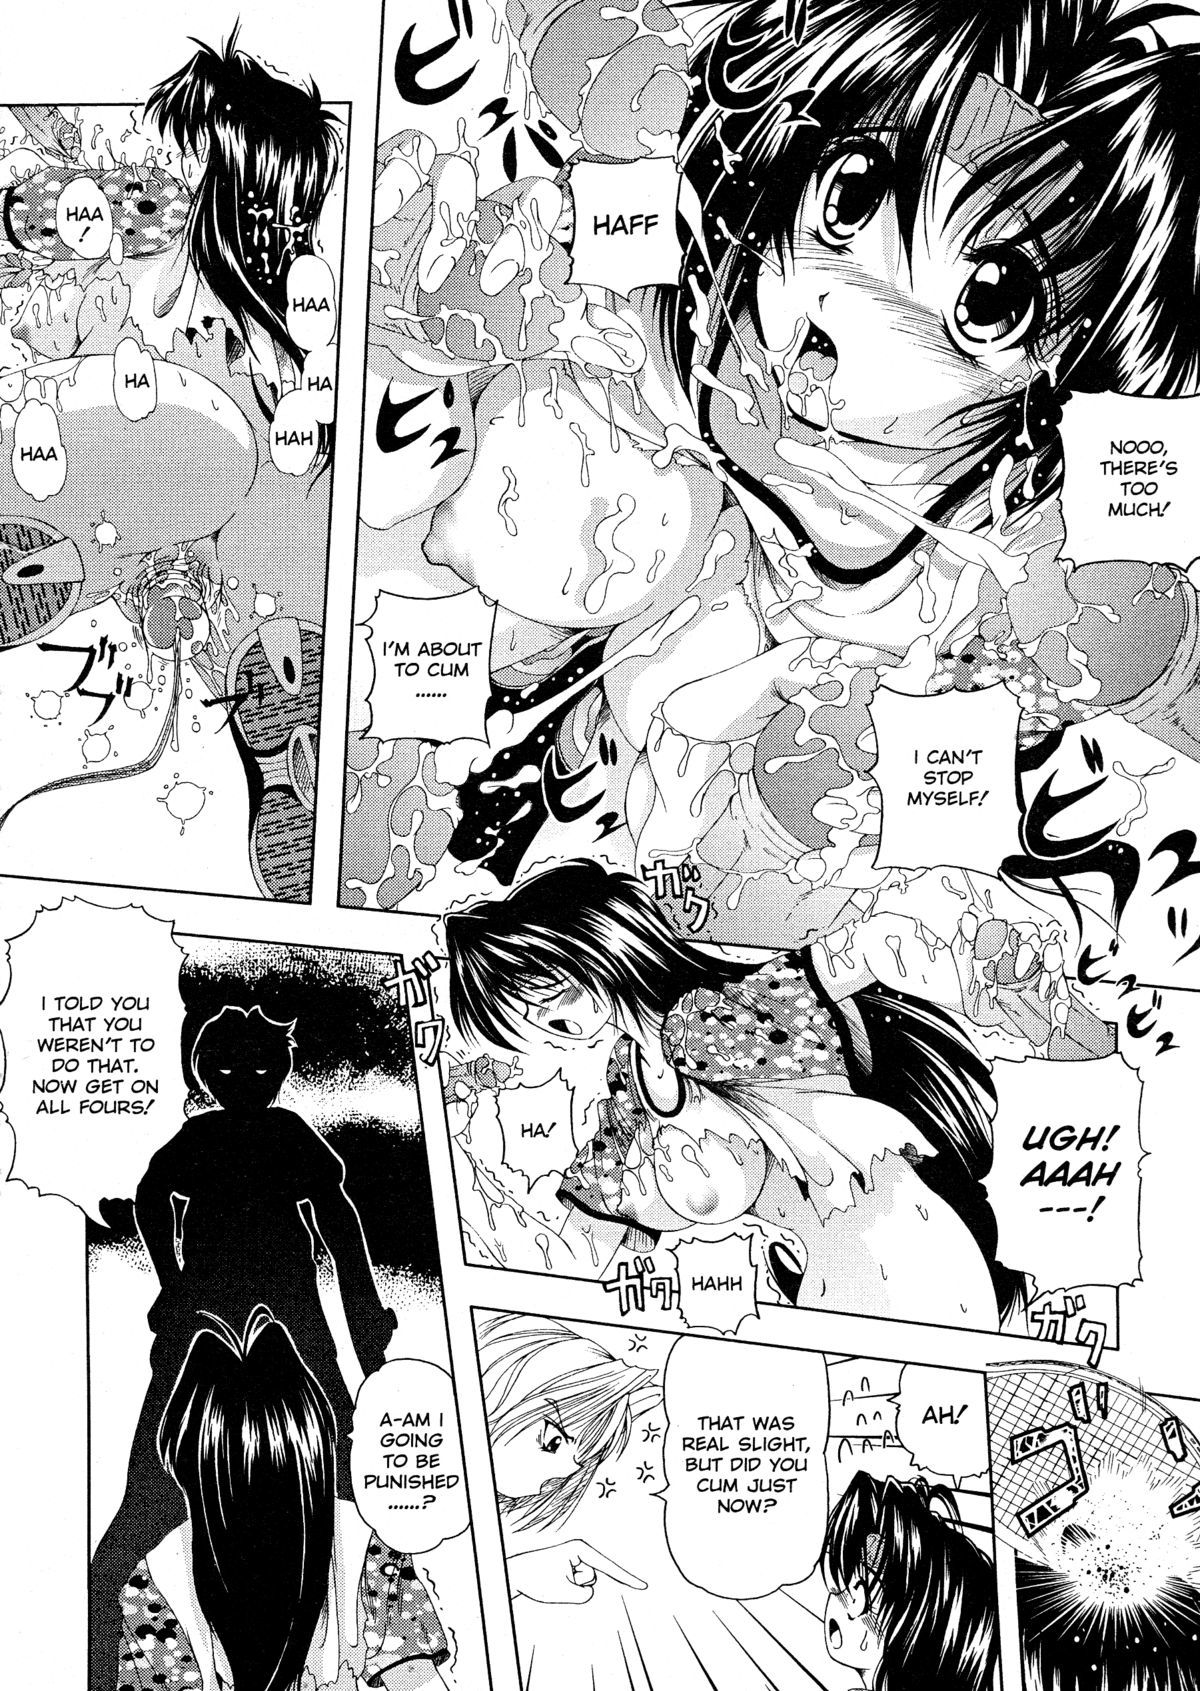 Flashbang!Hi-res 123 hentai manga